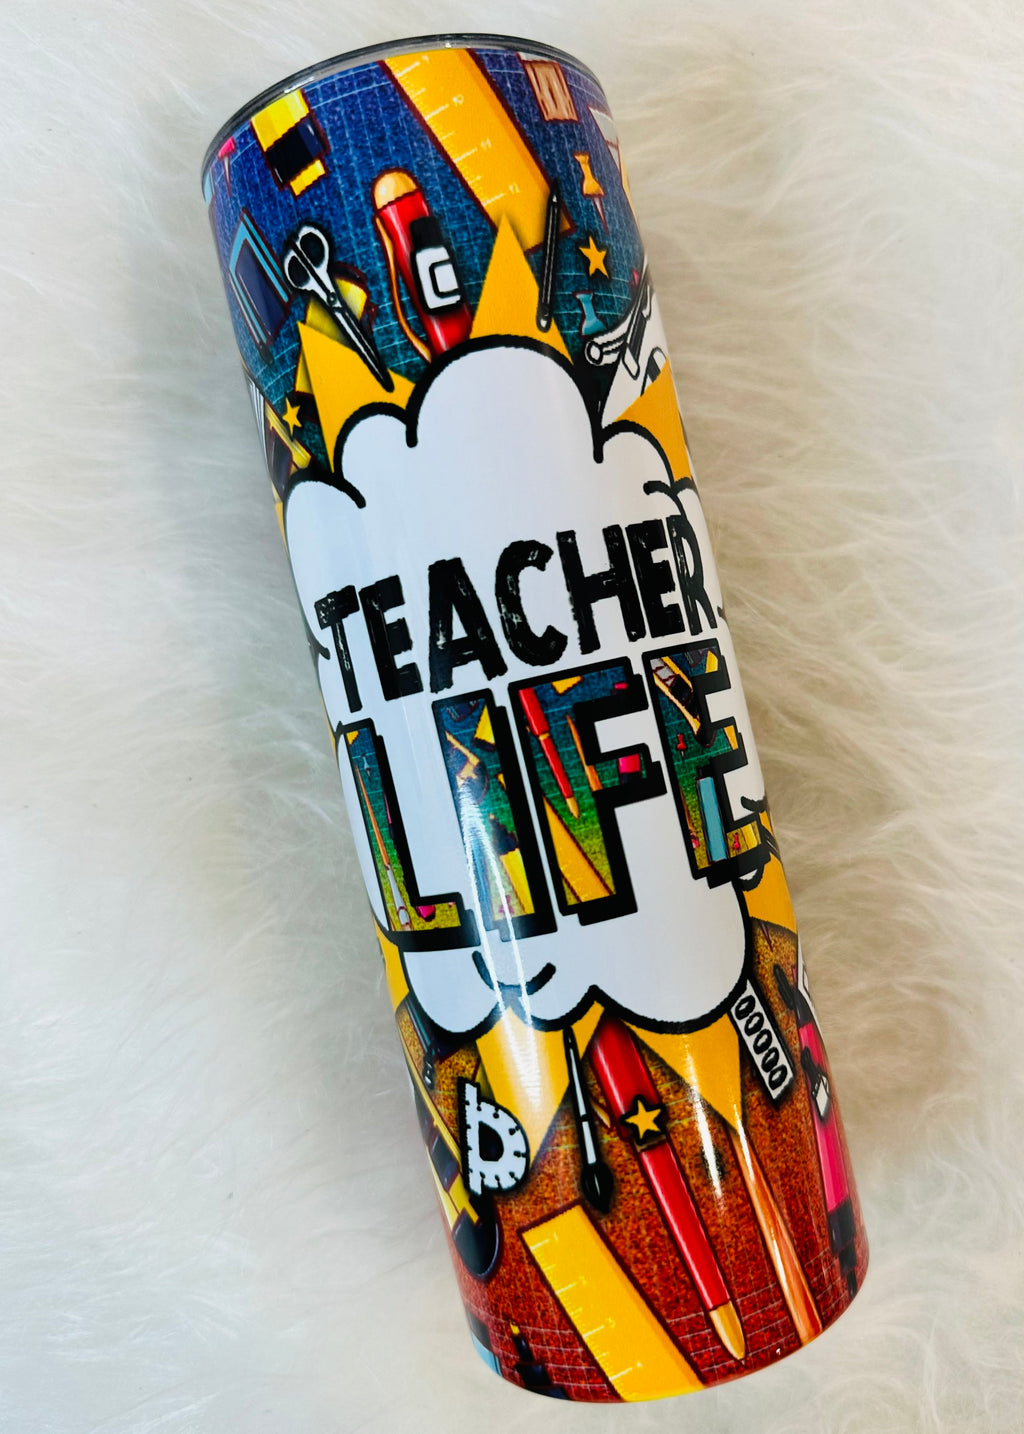 Teacher Life!